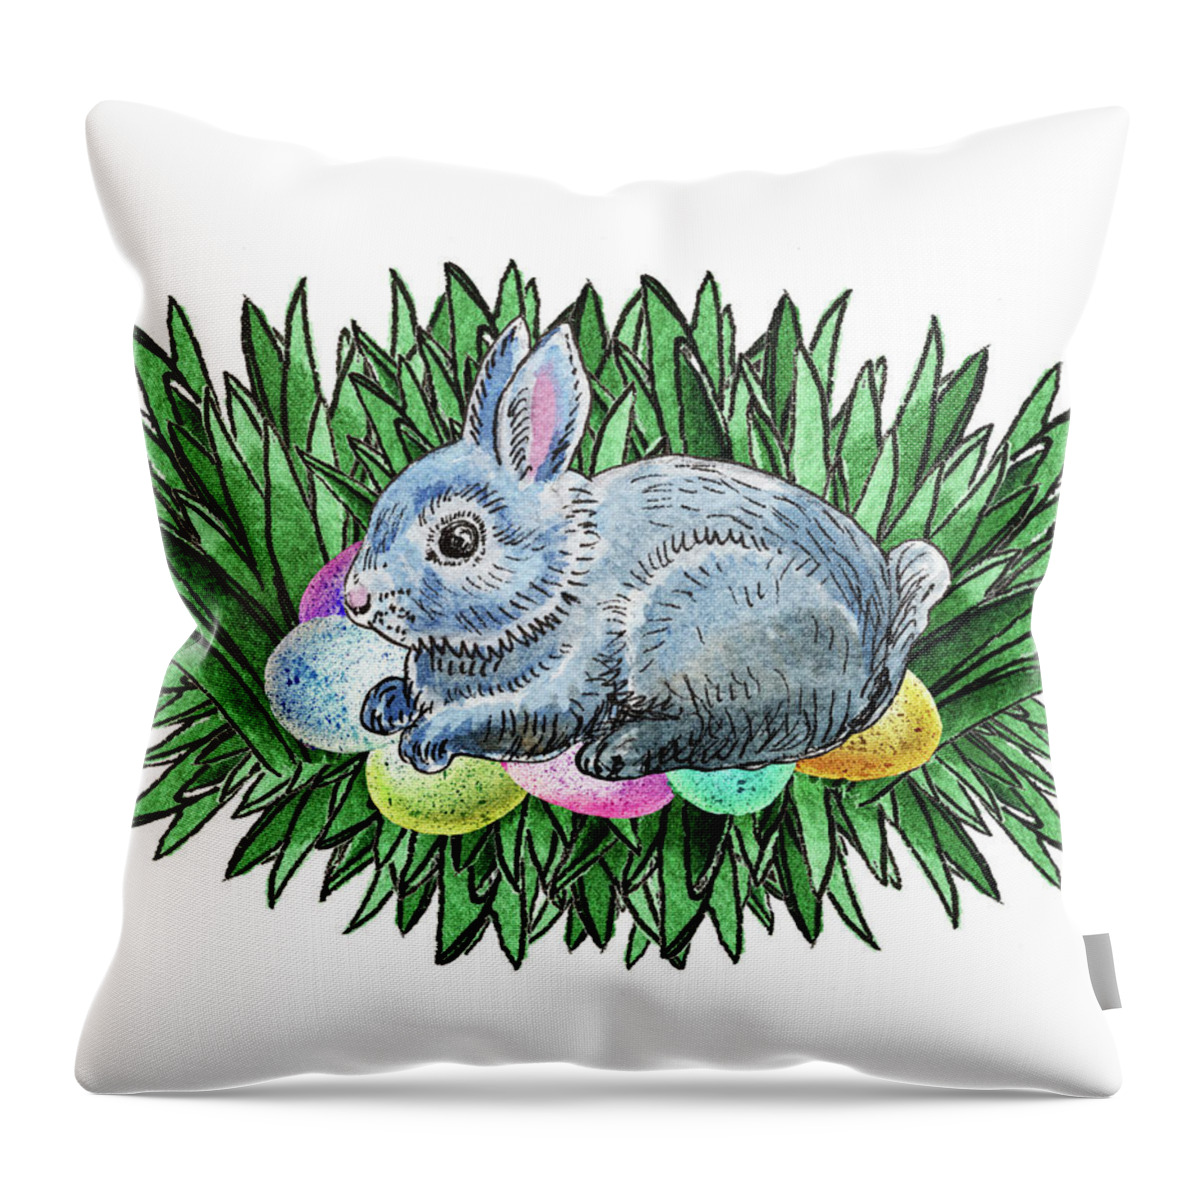 Easter Throw Pillow featuring the painting Nesting Easter Bunny by Irina Sztukowski